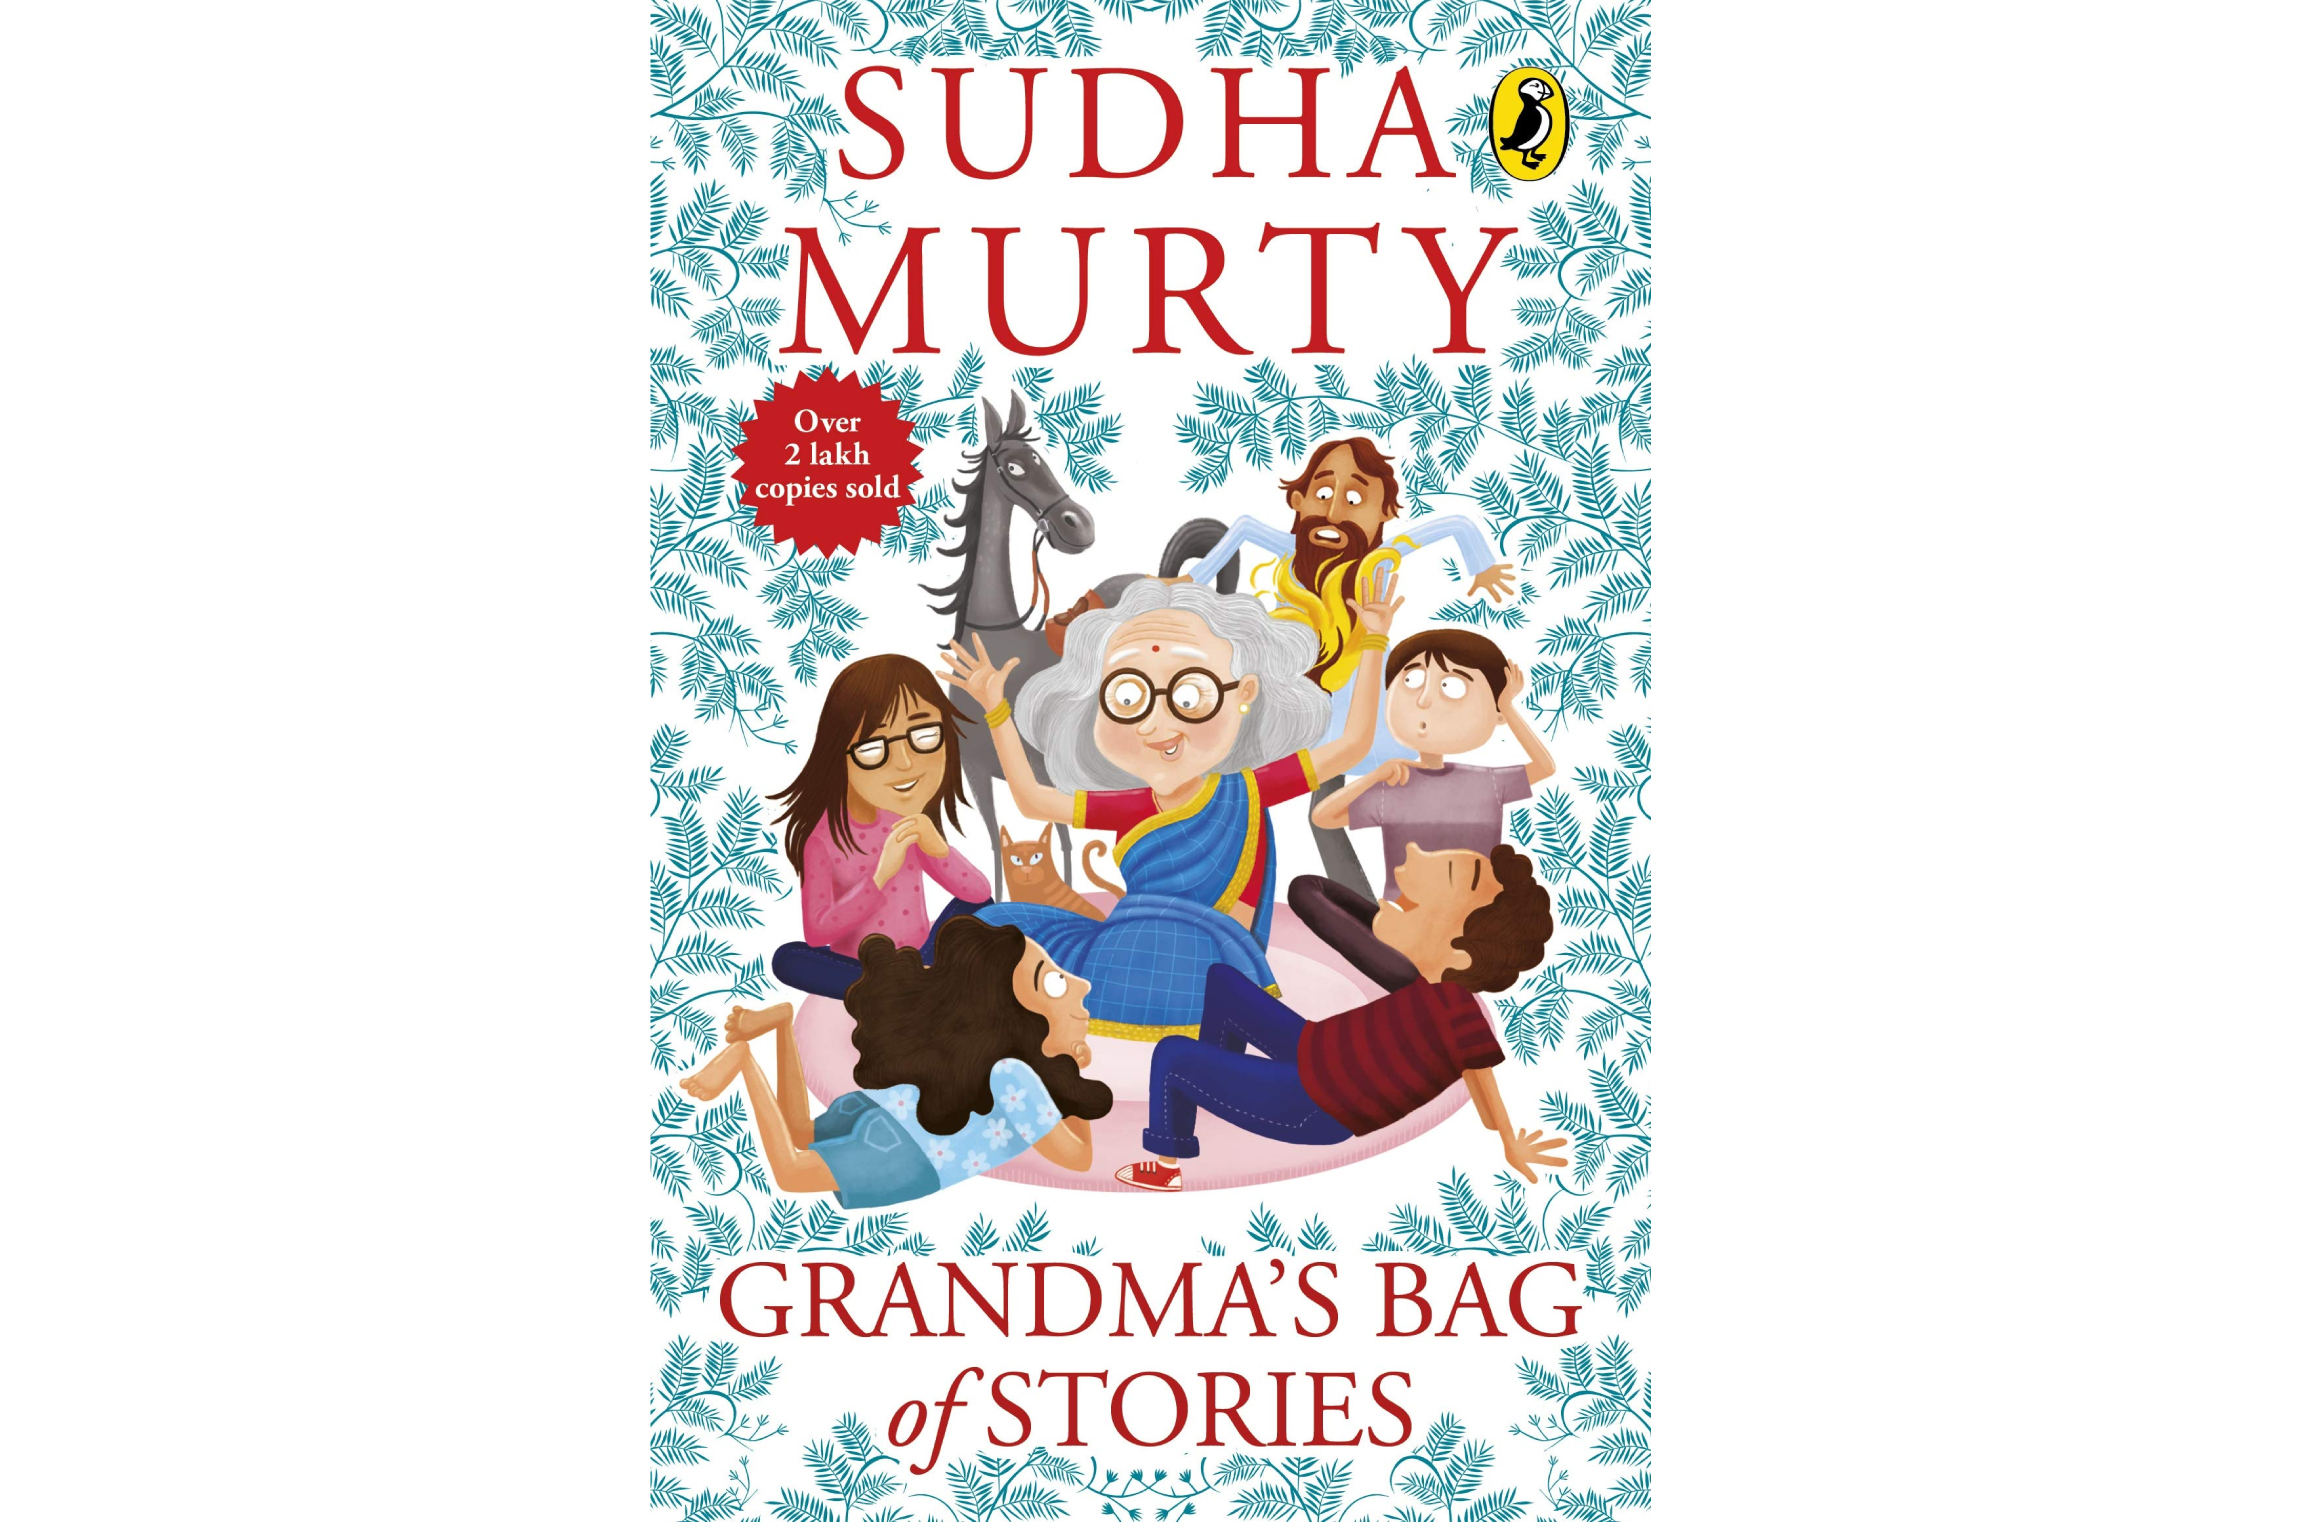 book review on grandma's bag of stories